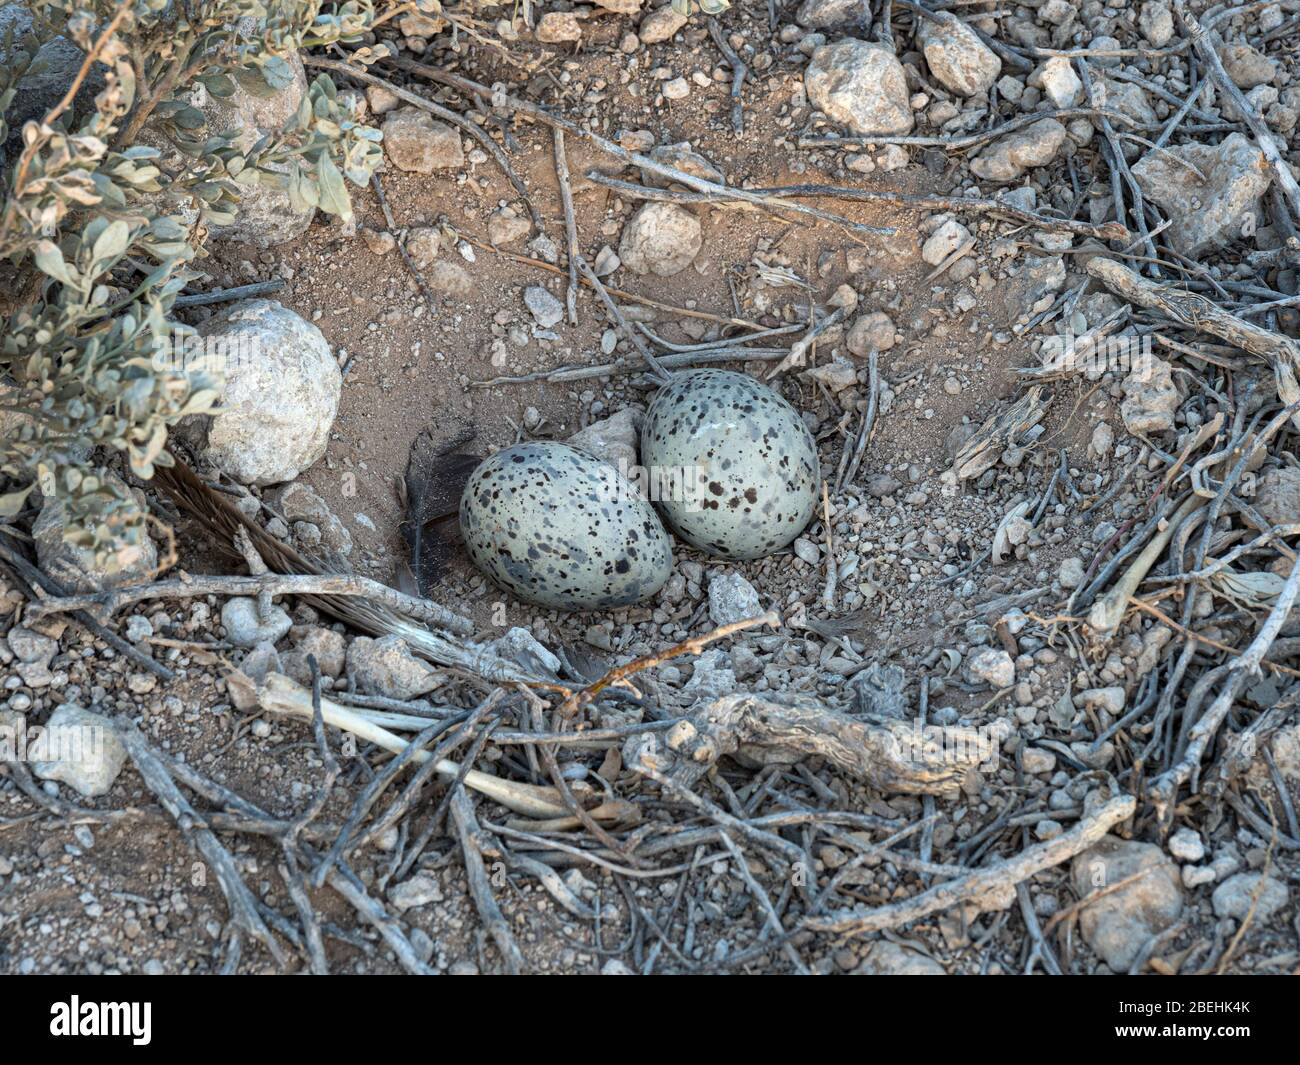 Heermann's gull, (Larus heermanni), eggs in nest at nesting site on Isla Rasa, Baja California, Mexico. Stock Photo